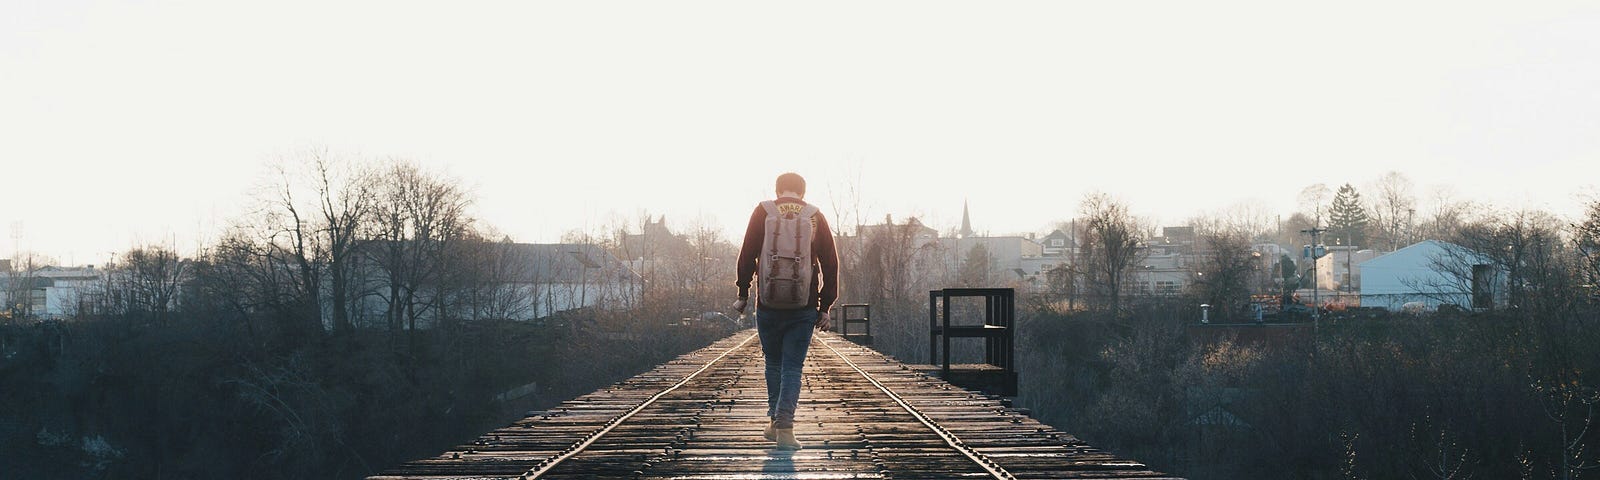 Man walking alone down railroad tracks